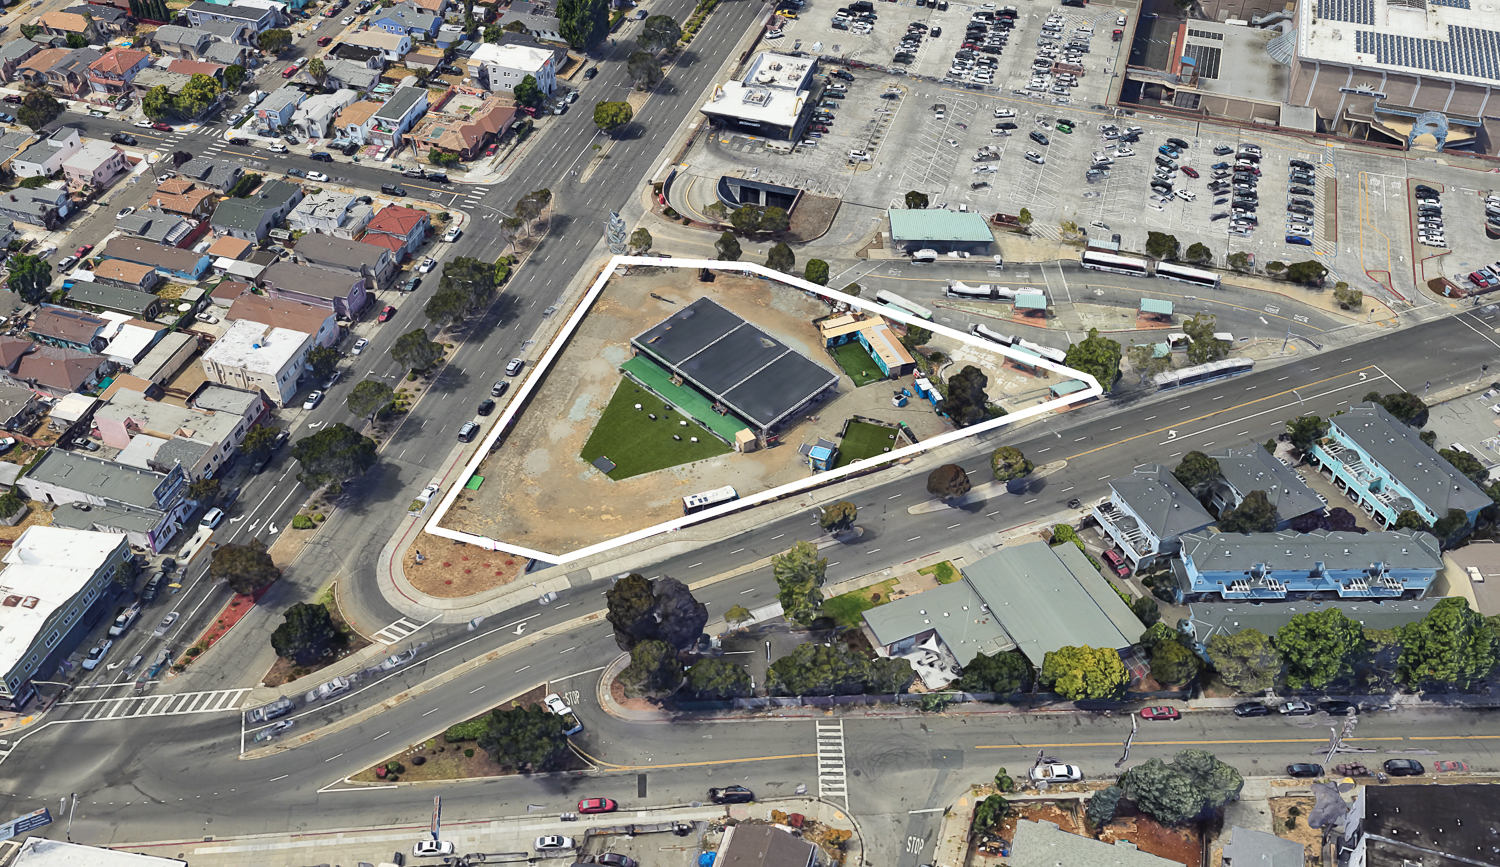 6955 Foothill Boulevard, image via Google Satellite